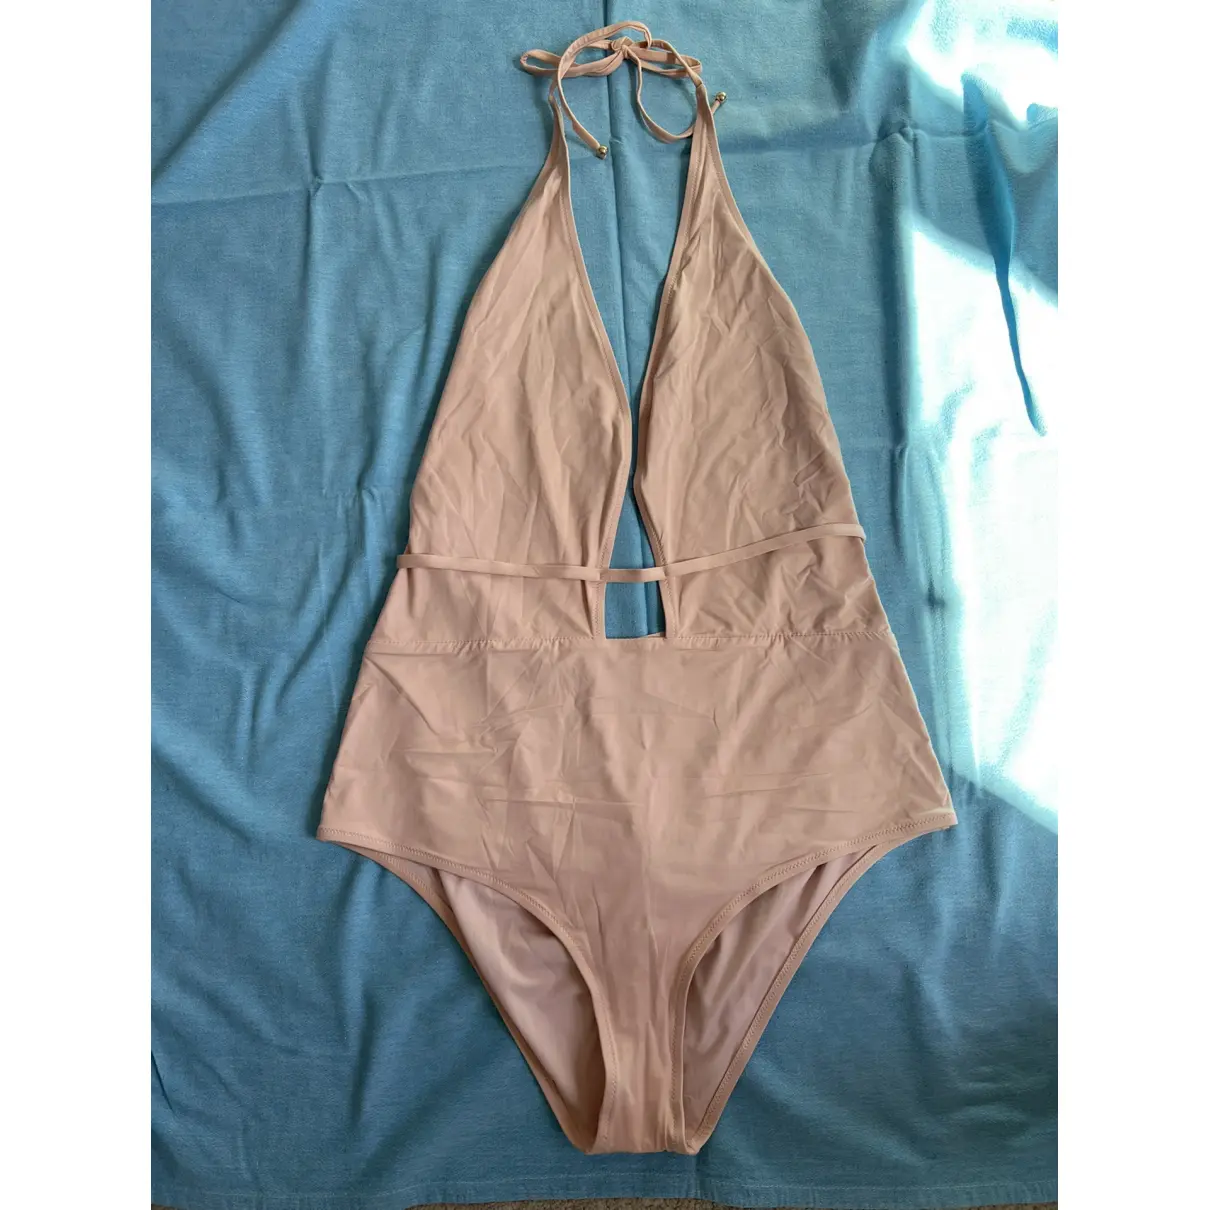 Buy Chloé One-piece swimsuit online